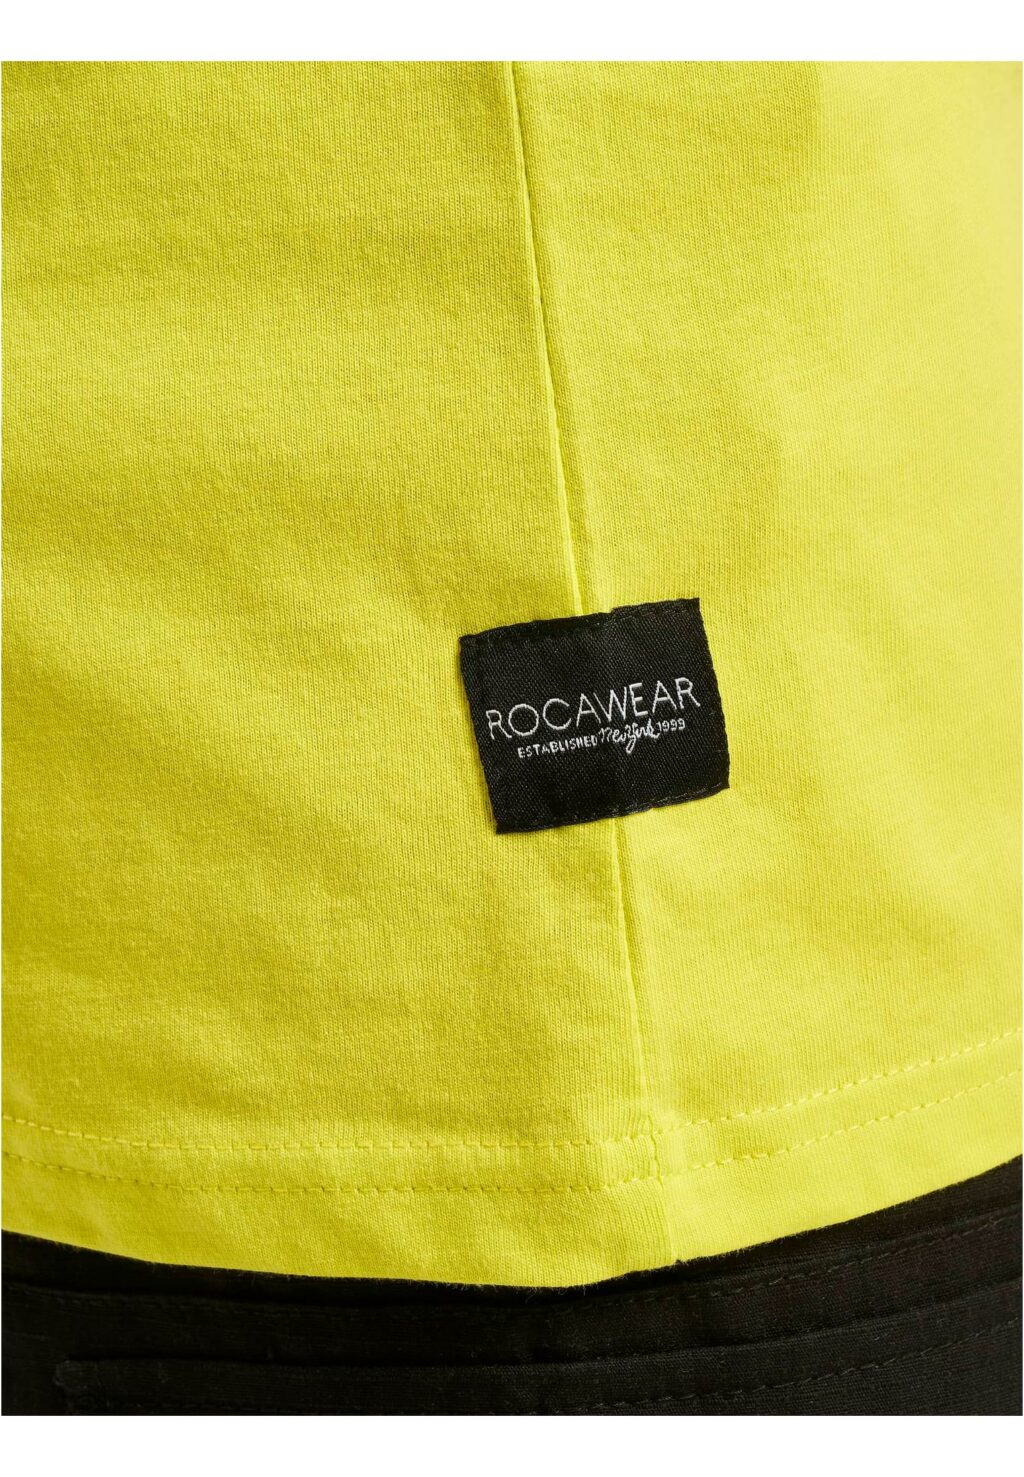 Rocawear NY 1999 T-Shirt green RWTS024